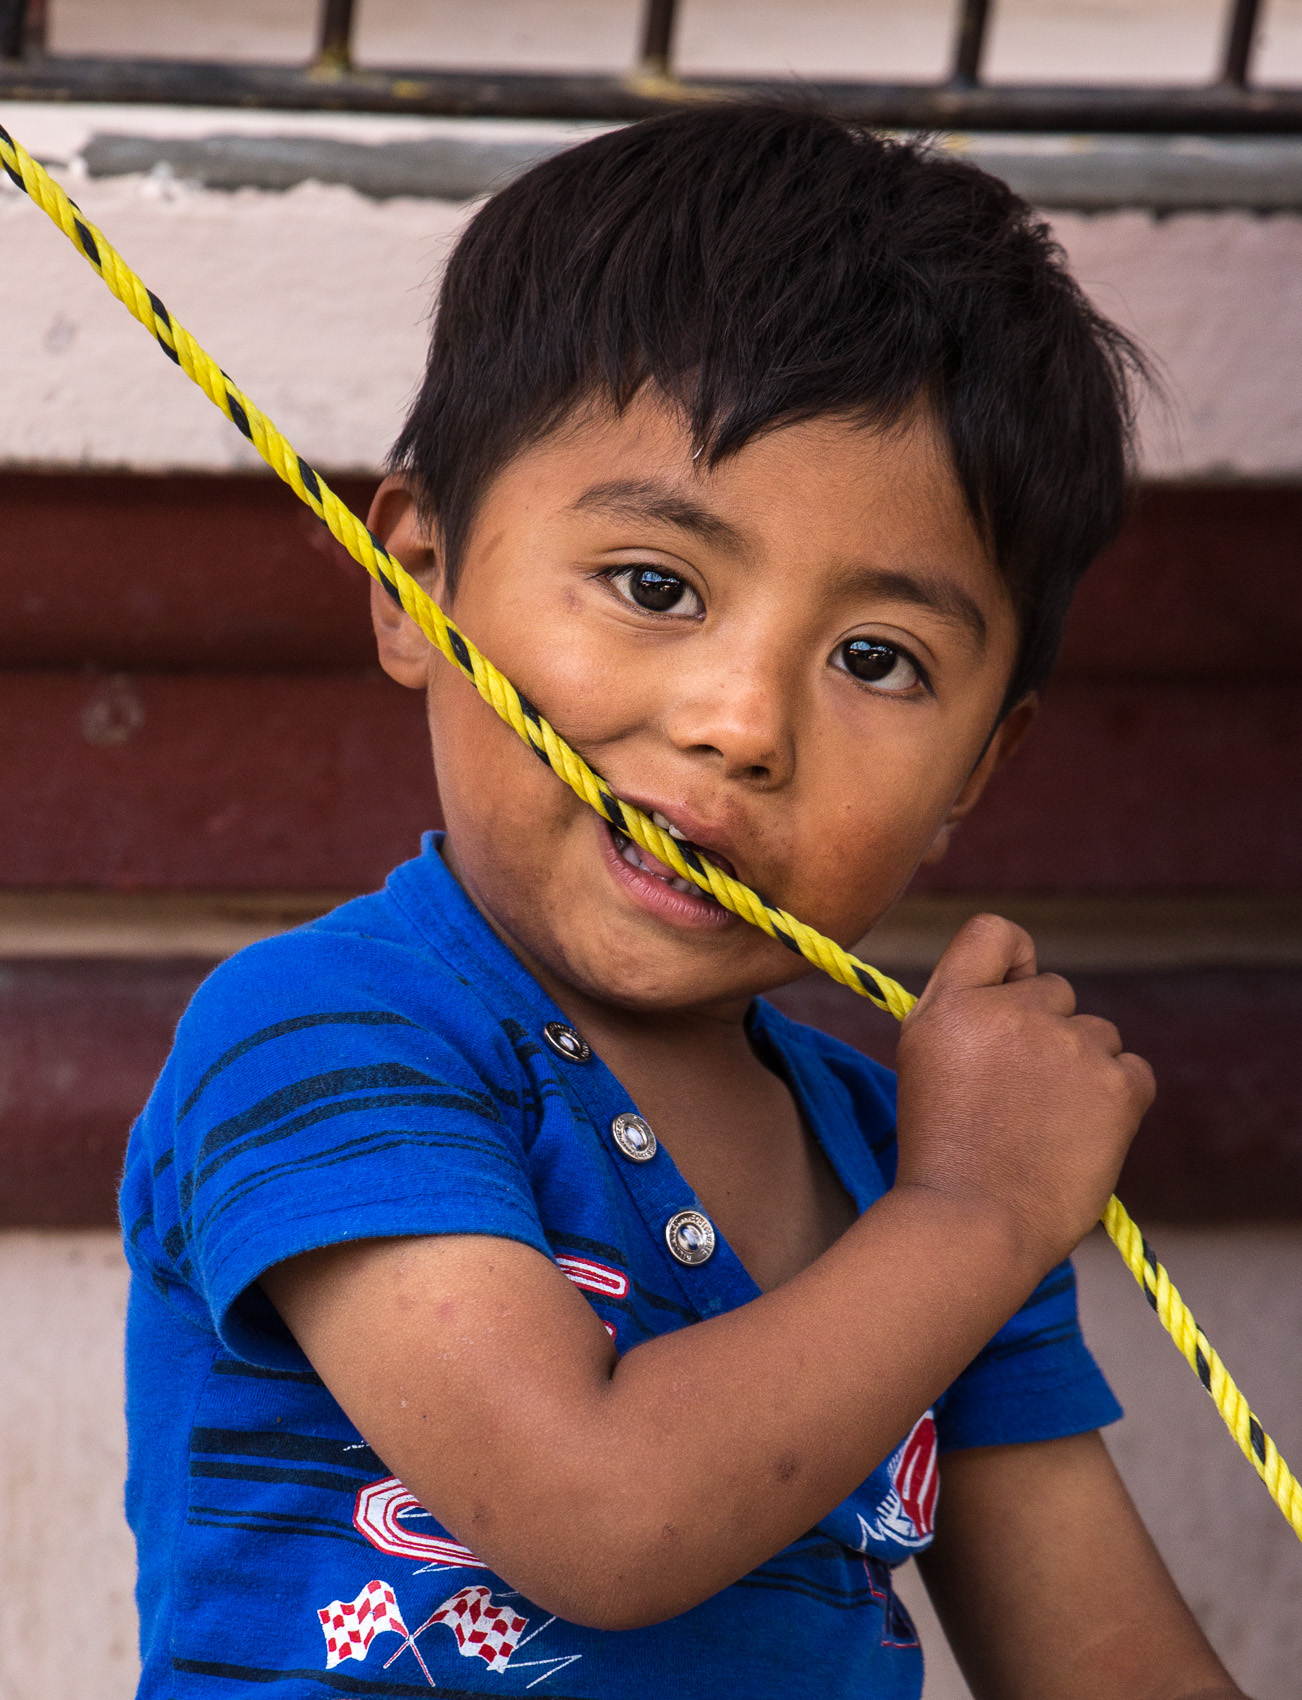 Mexico-Oaxaca-Miahuatlan-Boy-Yellow-Rope